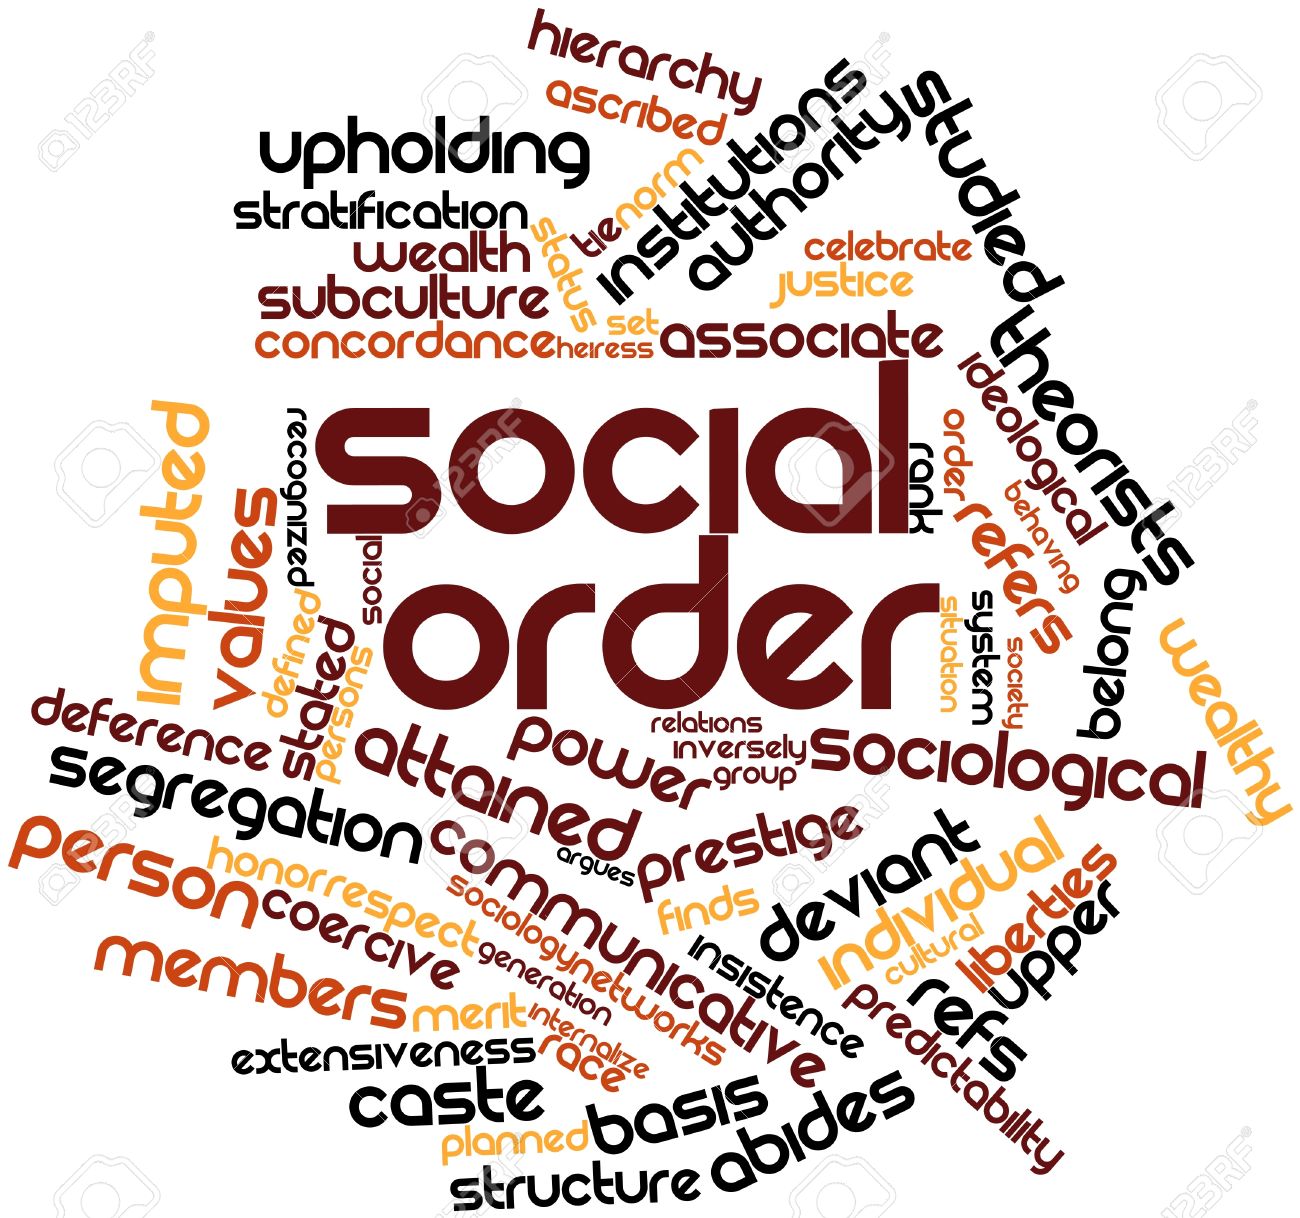 Social order is. British Sociological Association. Social orders